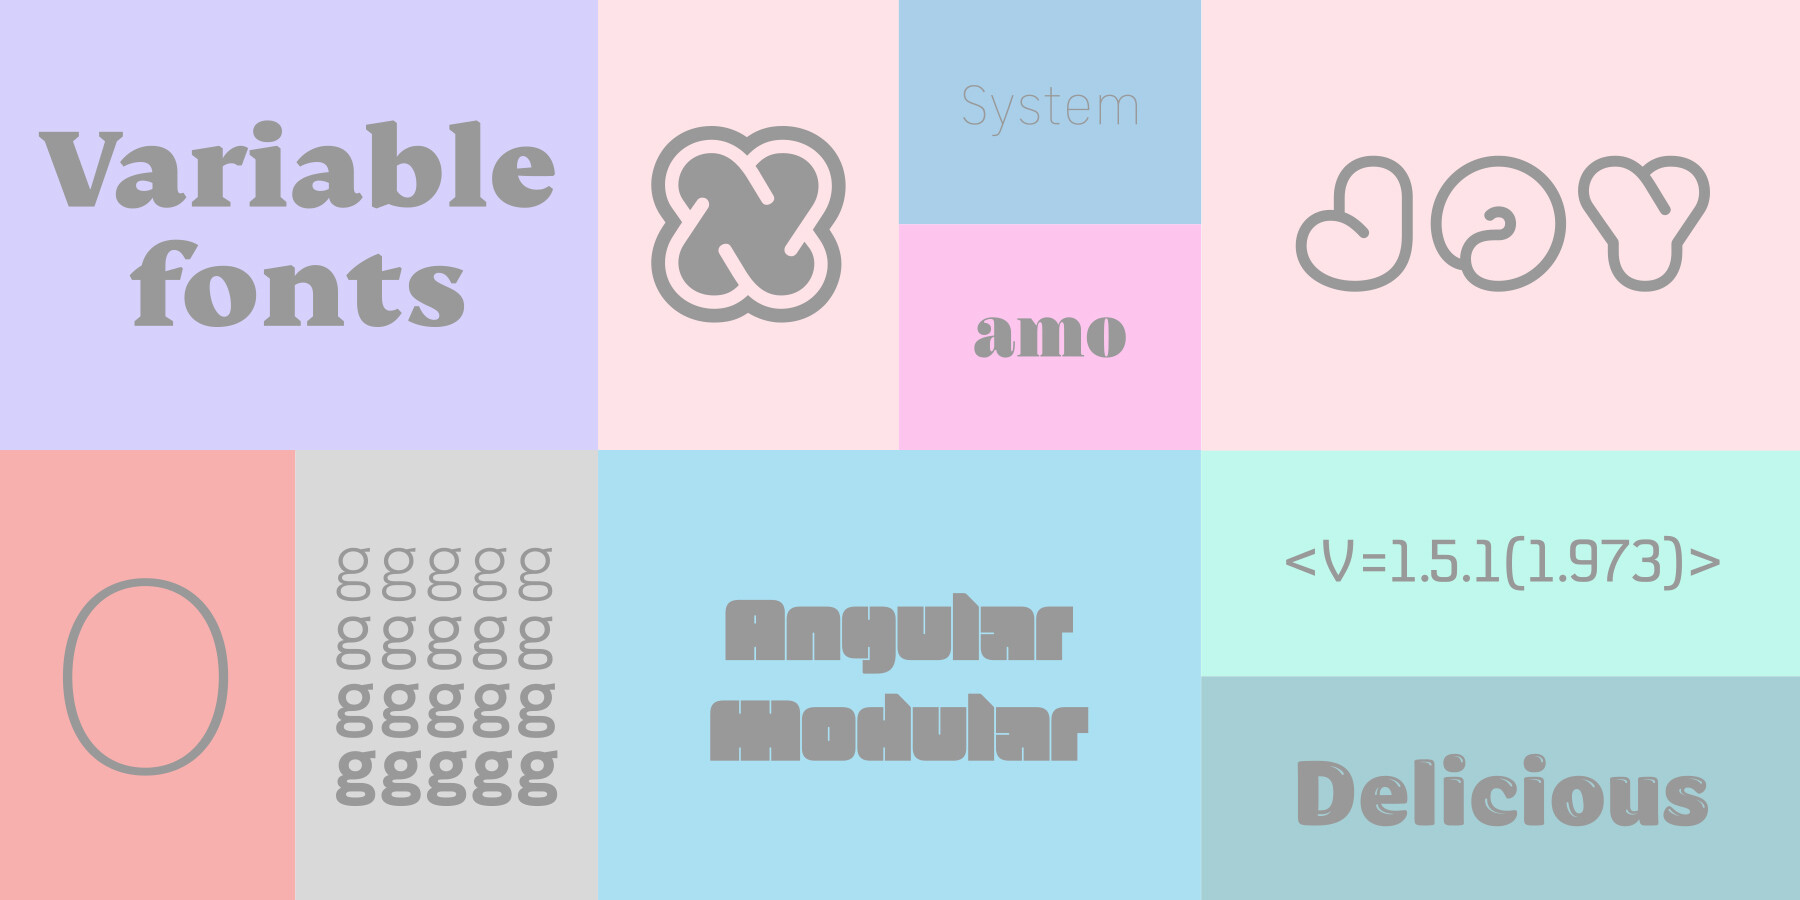 Webinar Registration | Variable fonts : the brand opportunity.